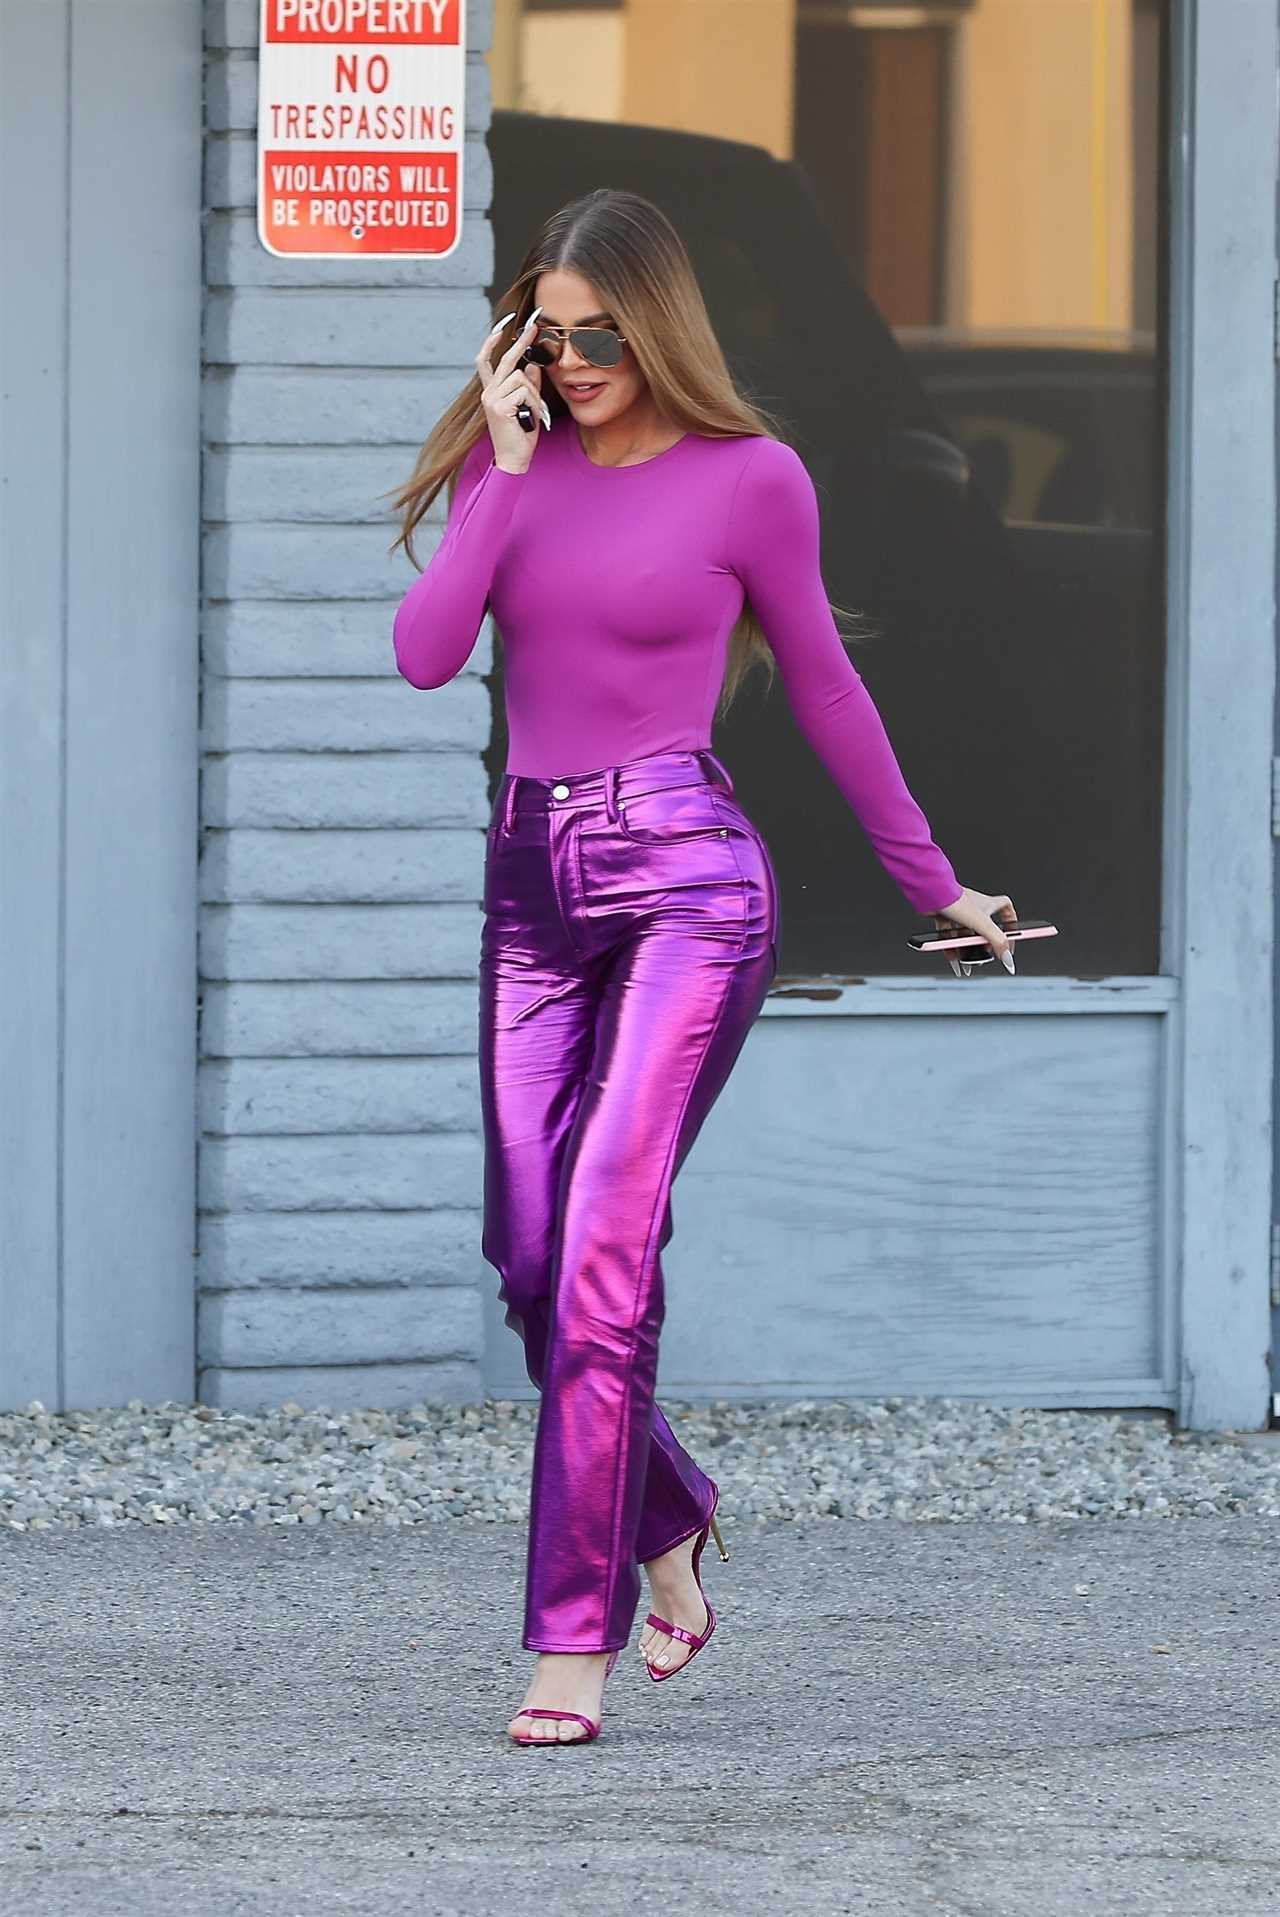 Khloe Kardashian suffers embarrassing wardrobe malfunction as she shows off shrinking legs & butt in shiny purple pants